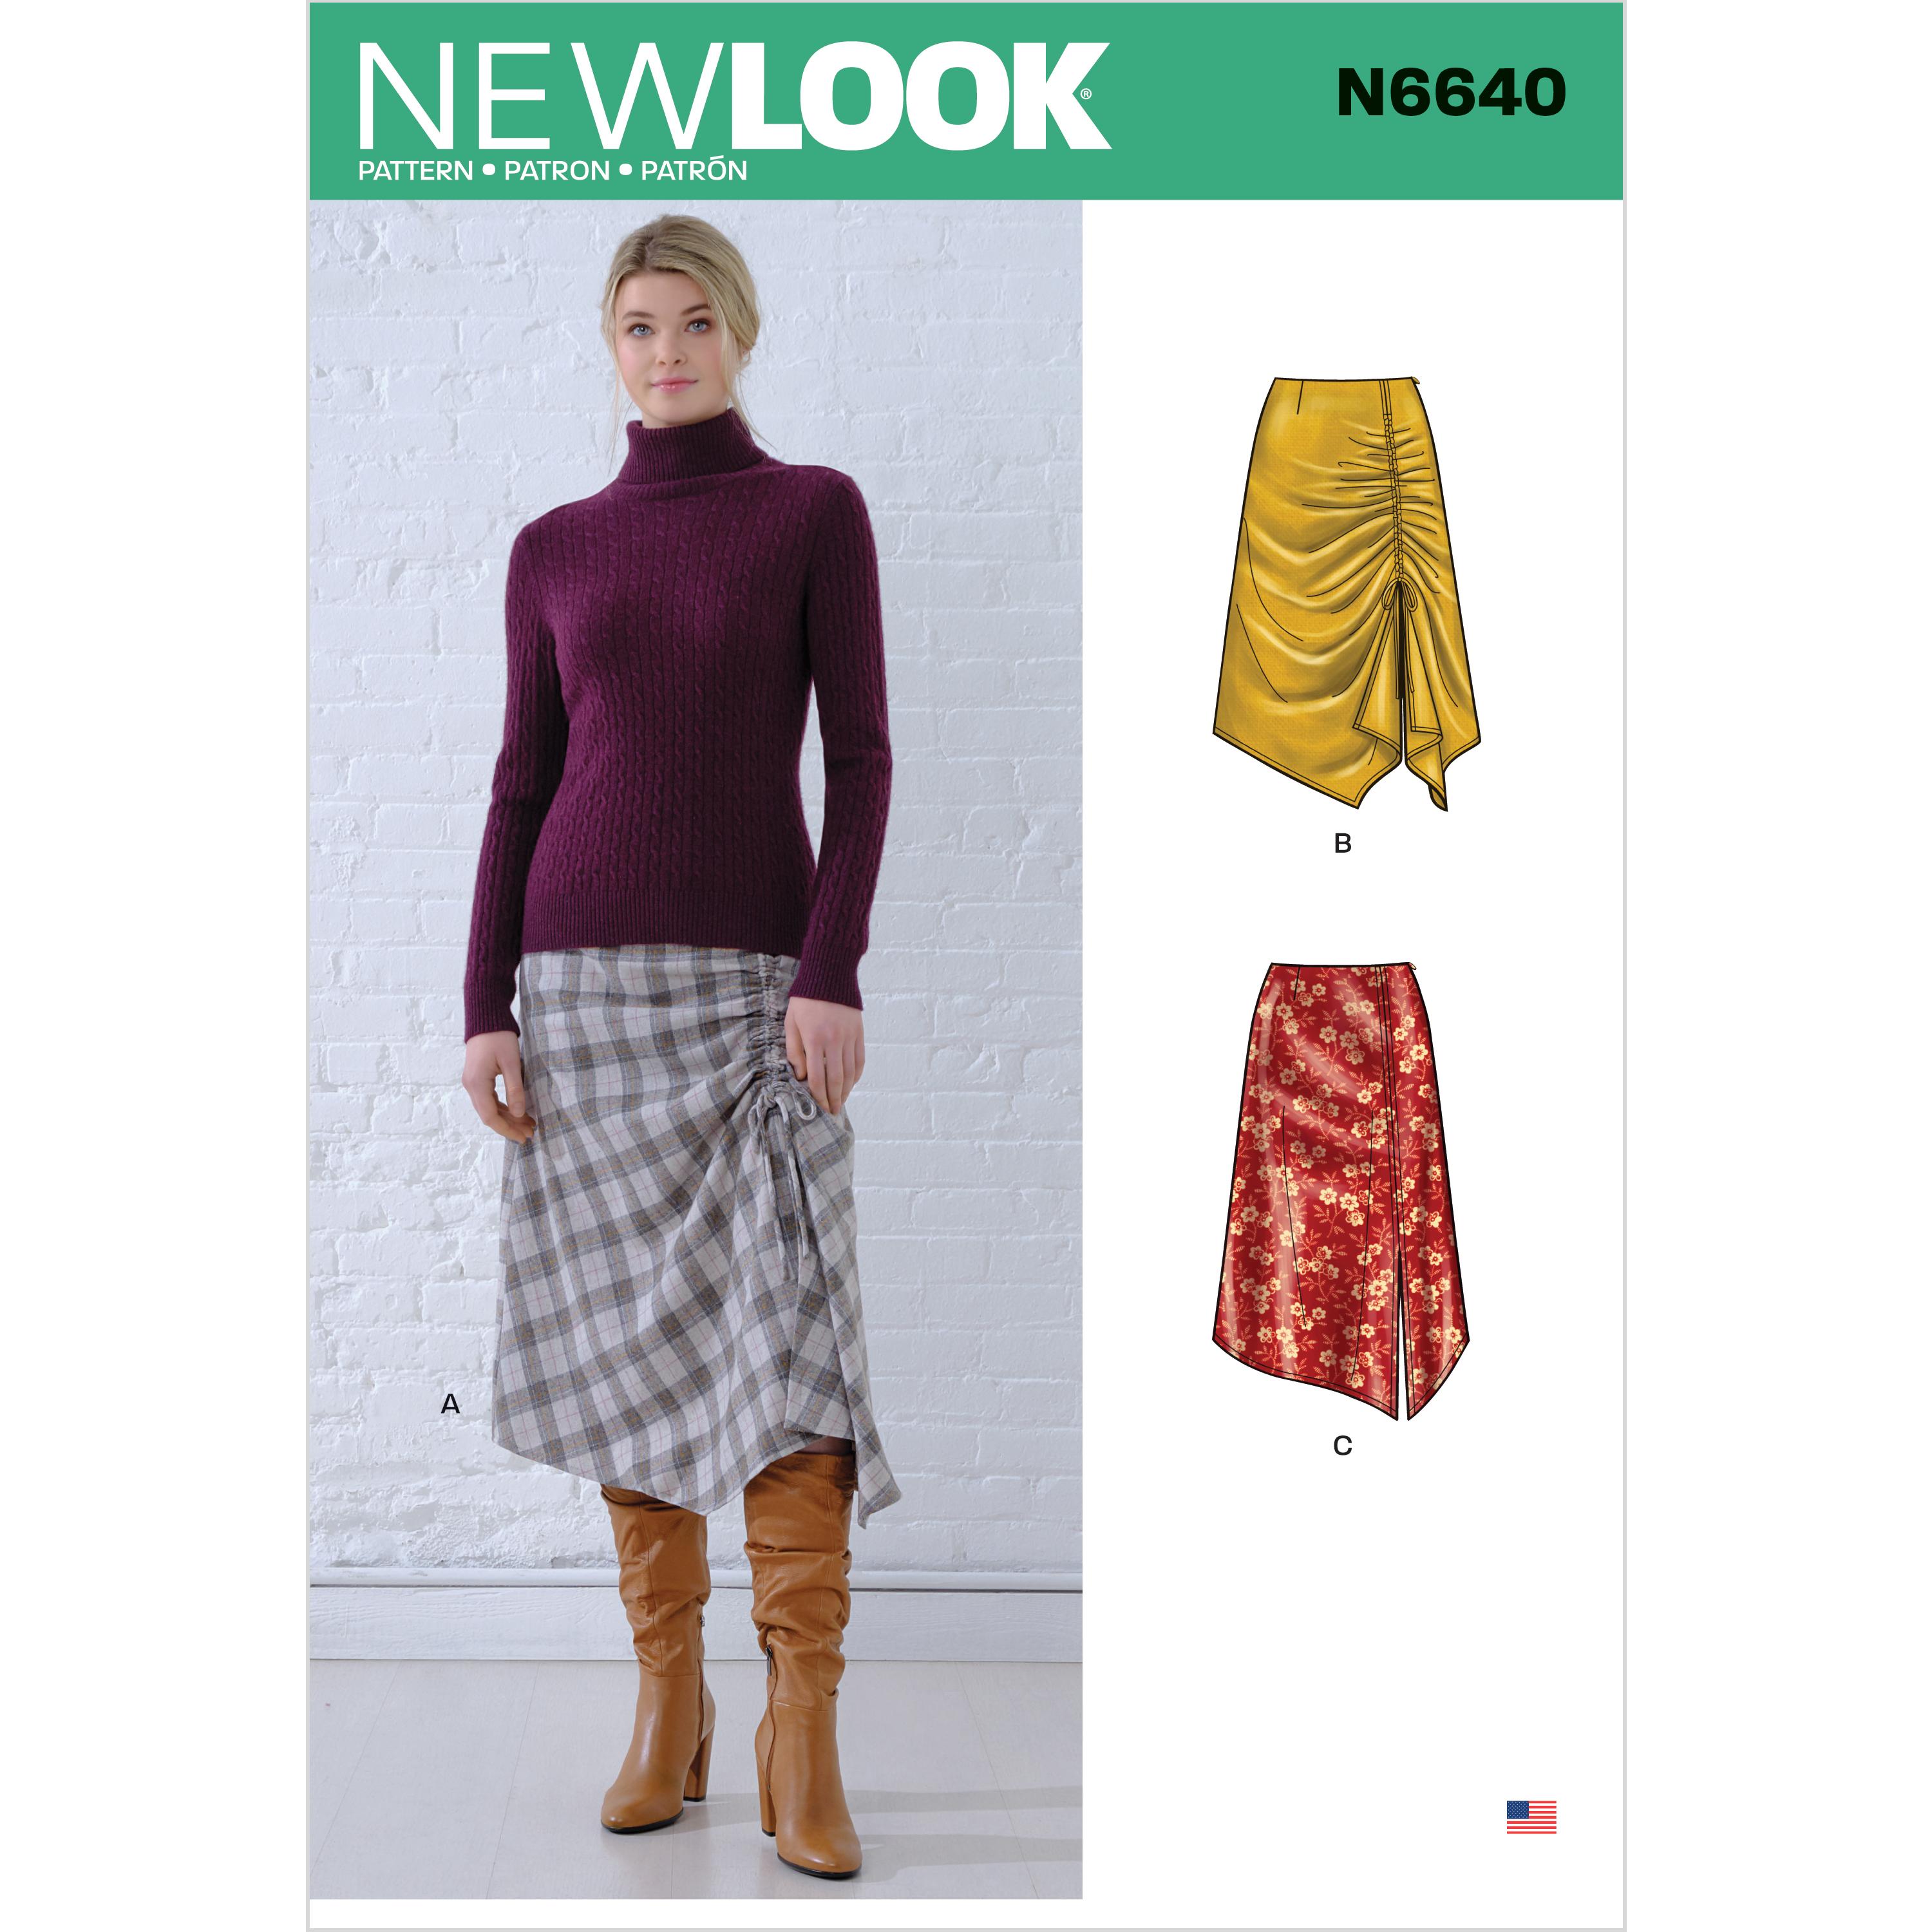 New Look Sewing Pattern N6640 Misses' Asymmetrical Skirts